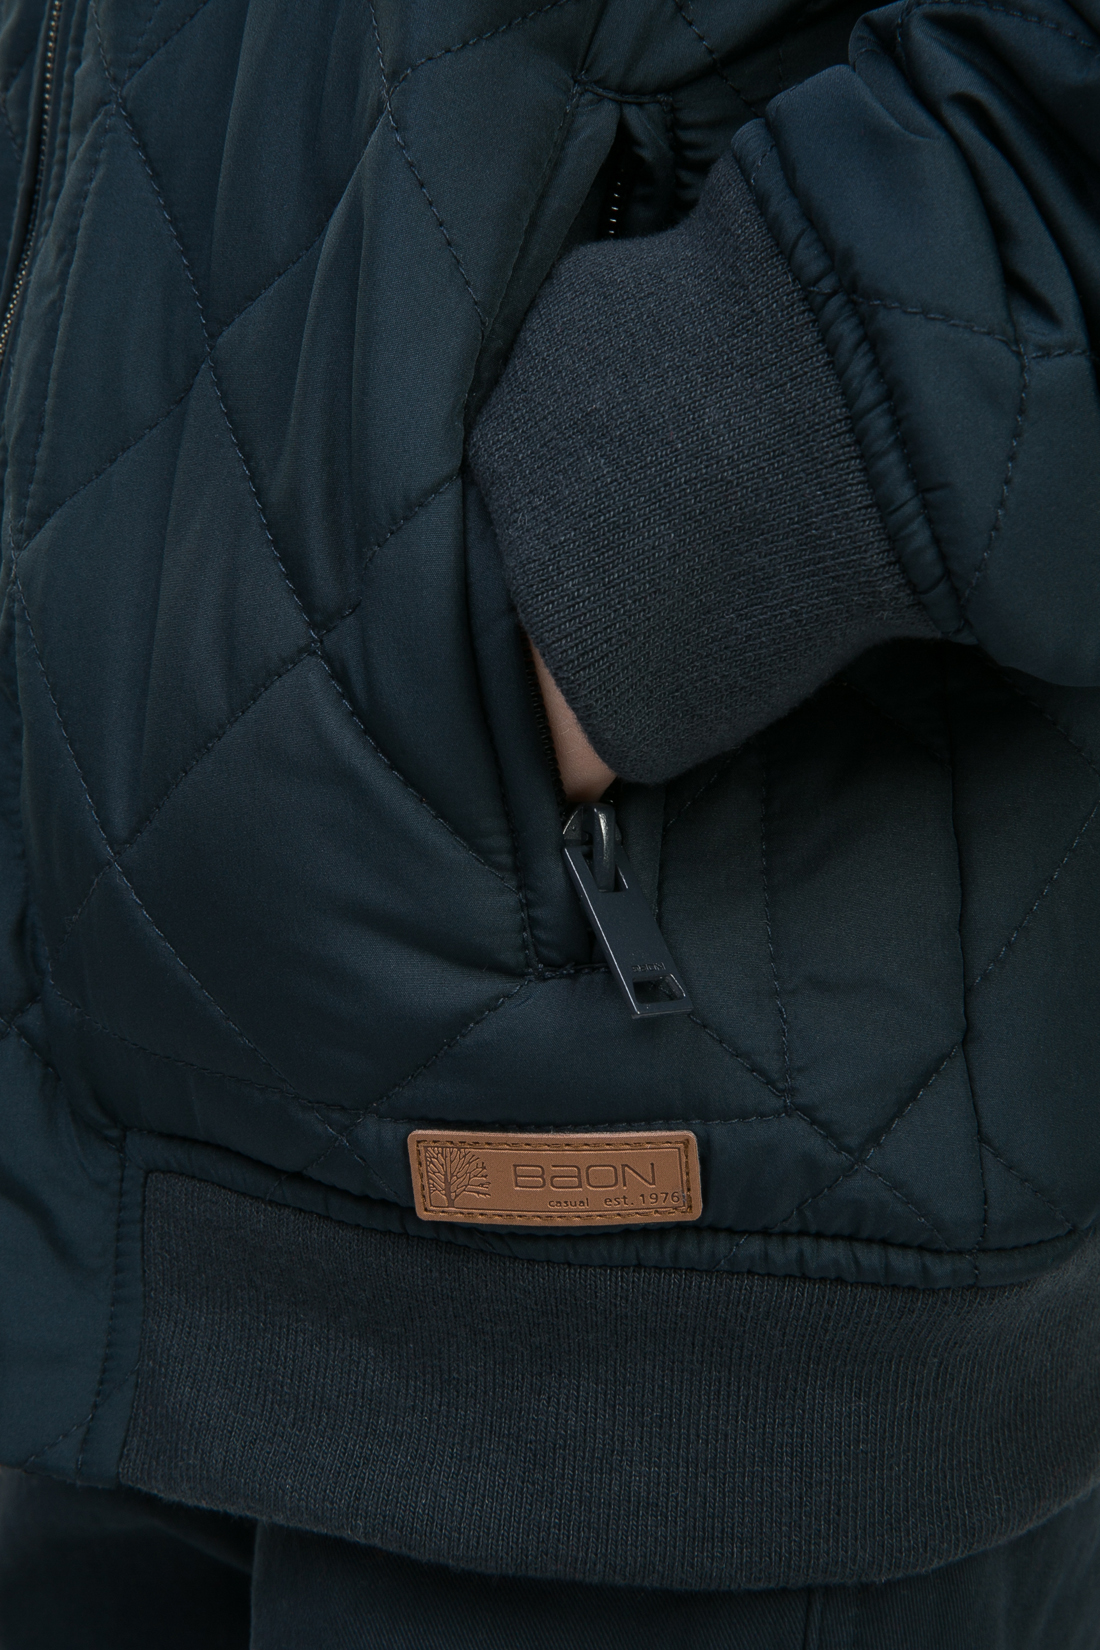 Куртка для мальчика (арт. baon BK538005), размер 98-104, цвет синий Куртка для мальчика (арт. baon BK538005) - фото 5